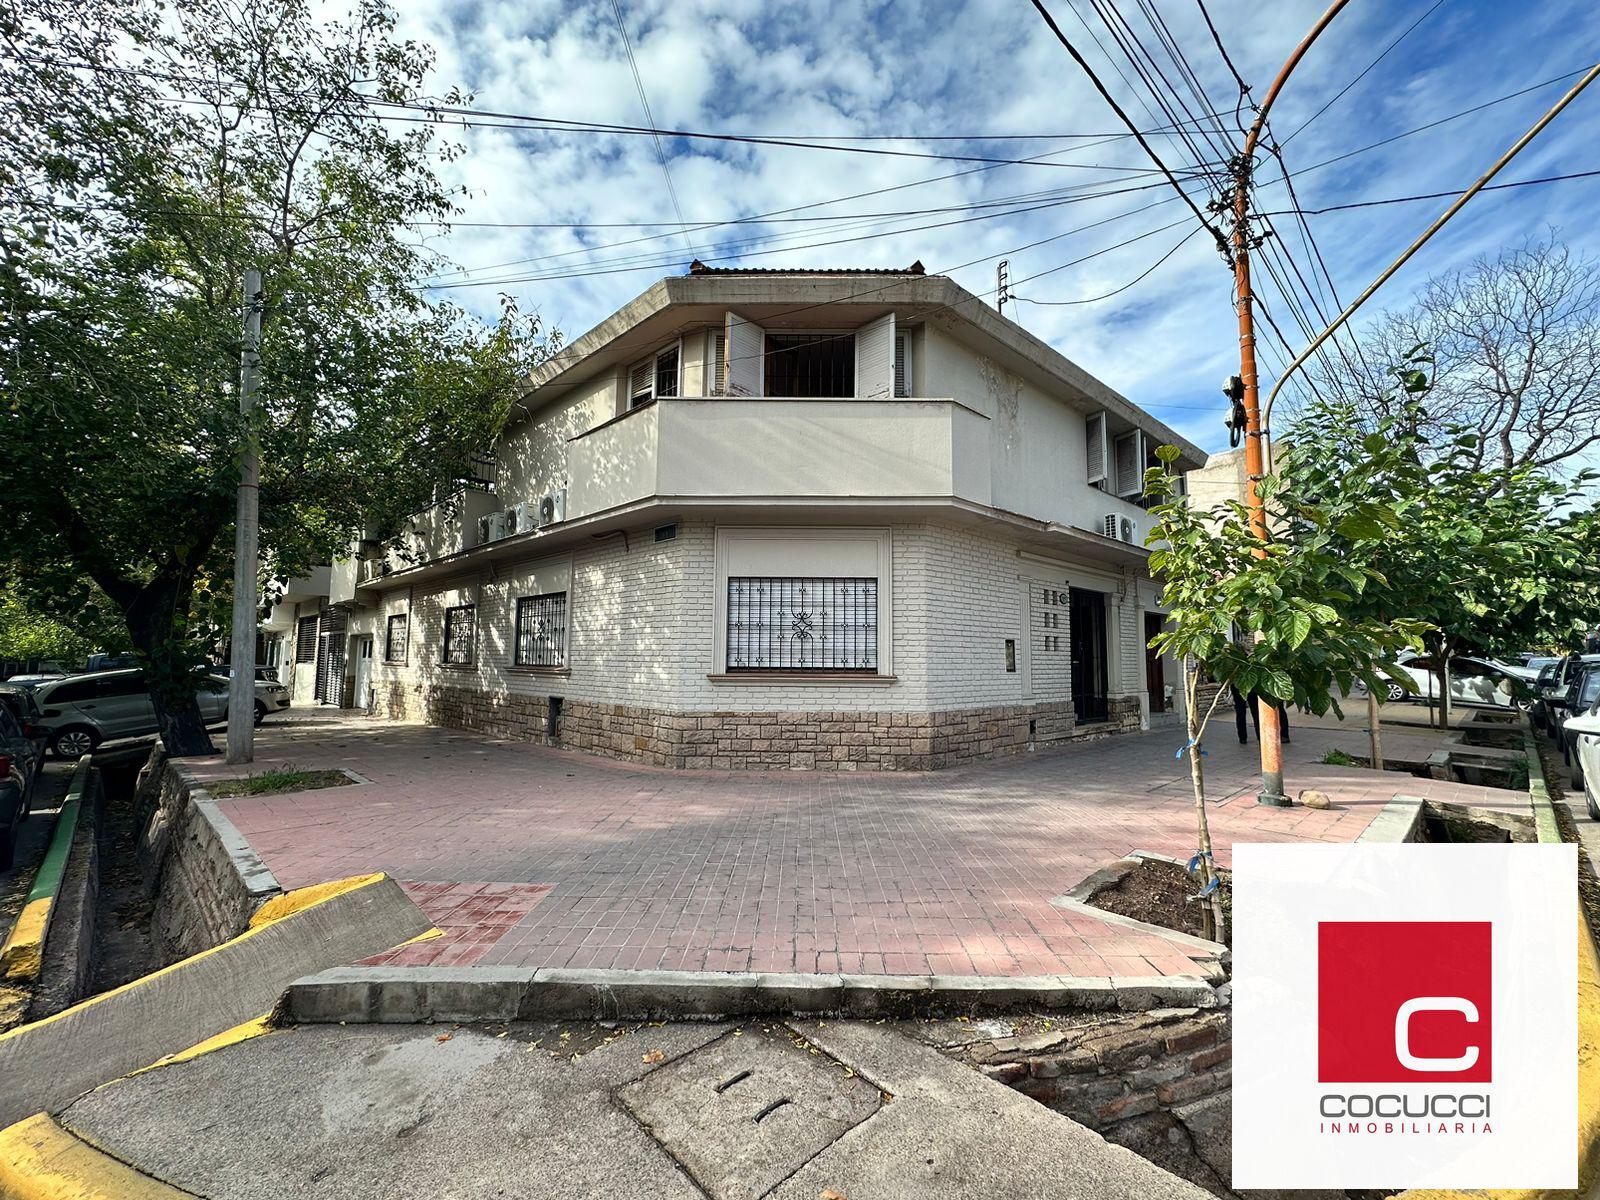 #5063556 | Sale | Horizontal Property | Mendoza (COCUCCI INMOBILIARIA)